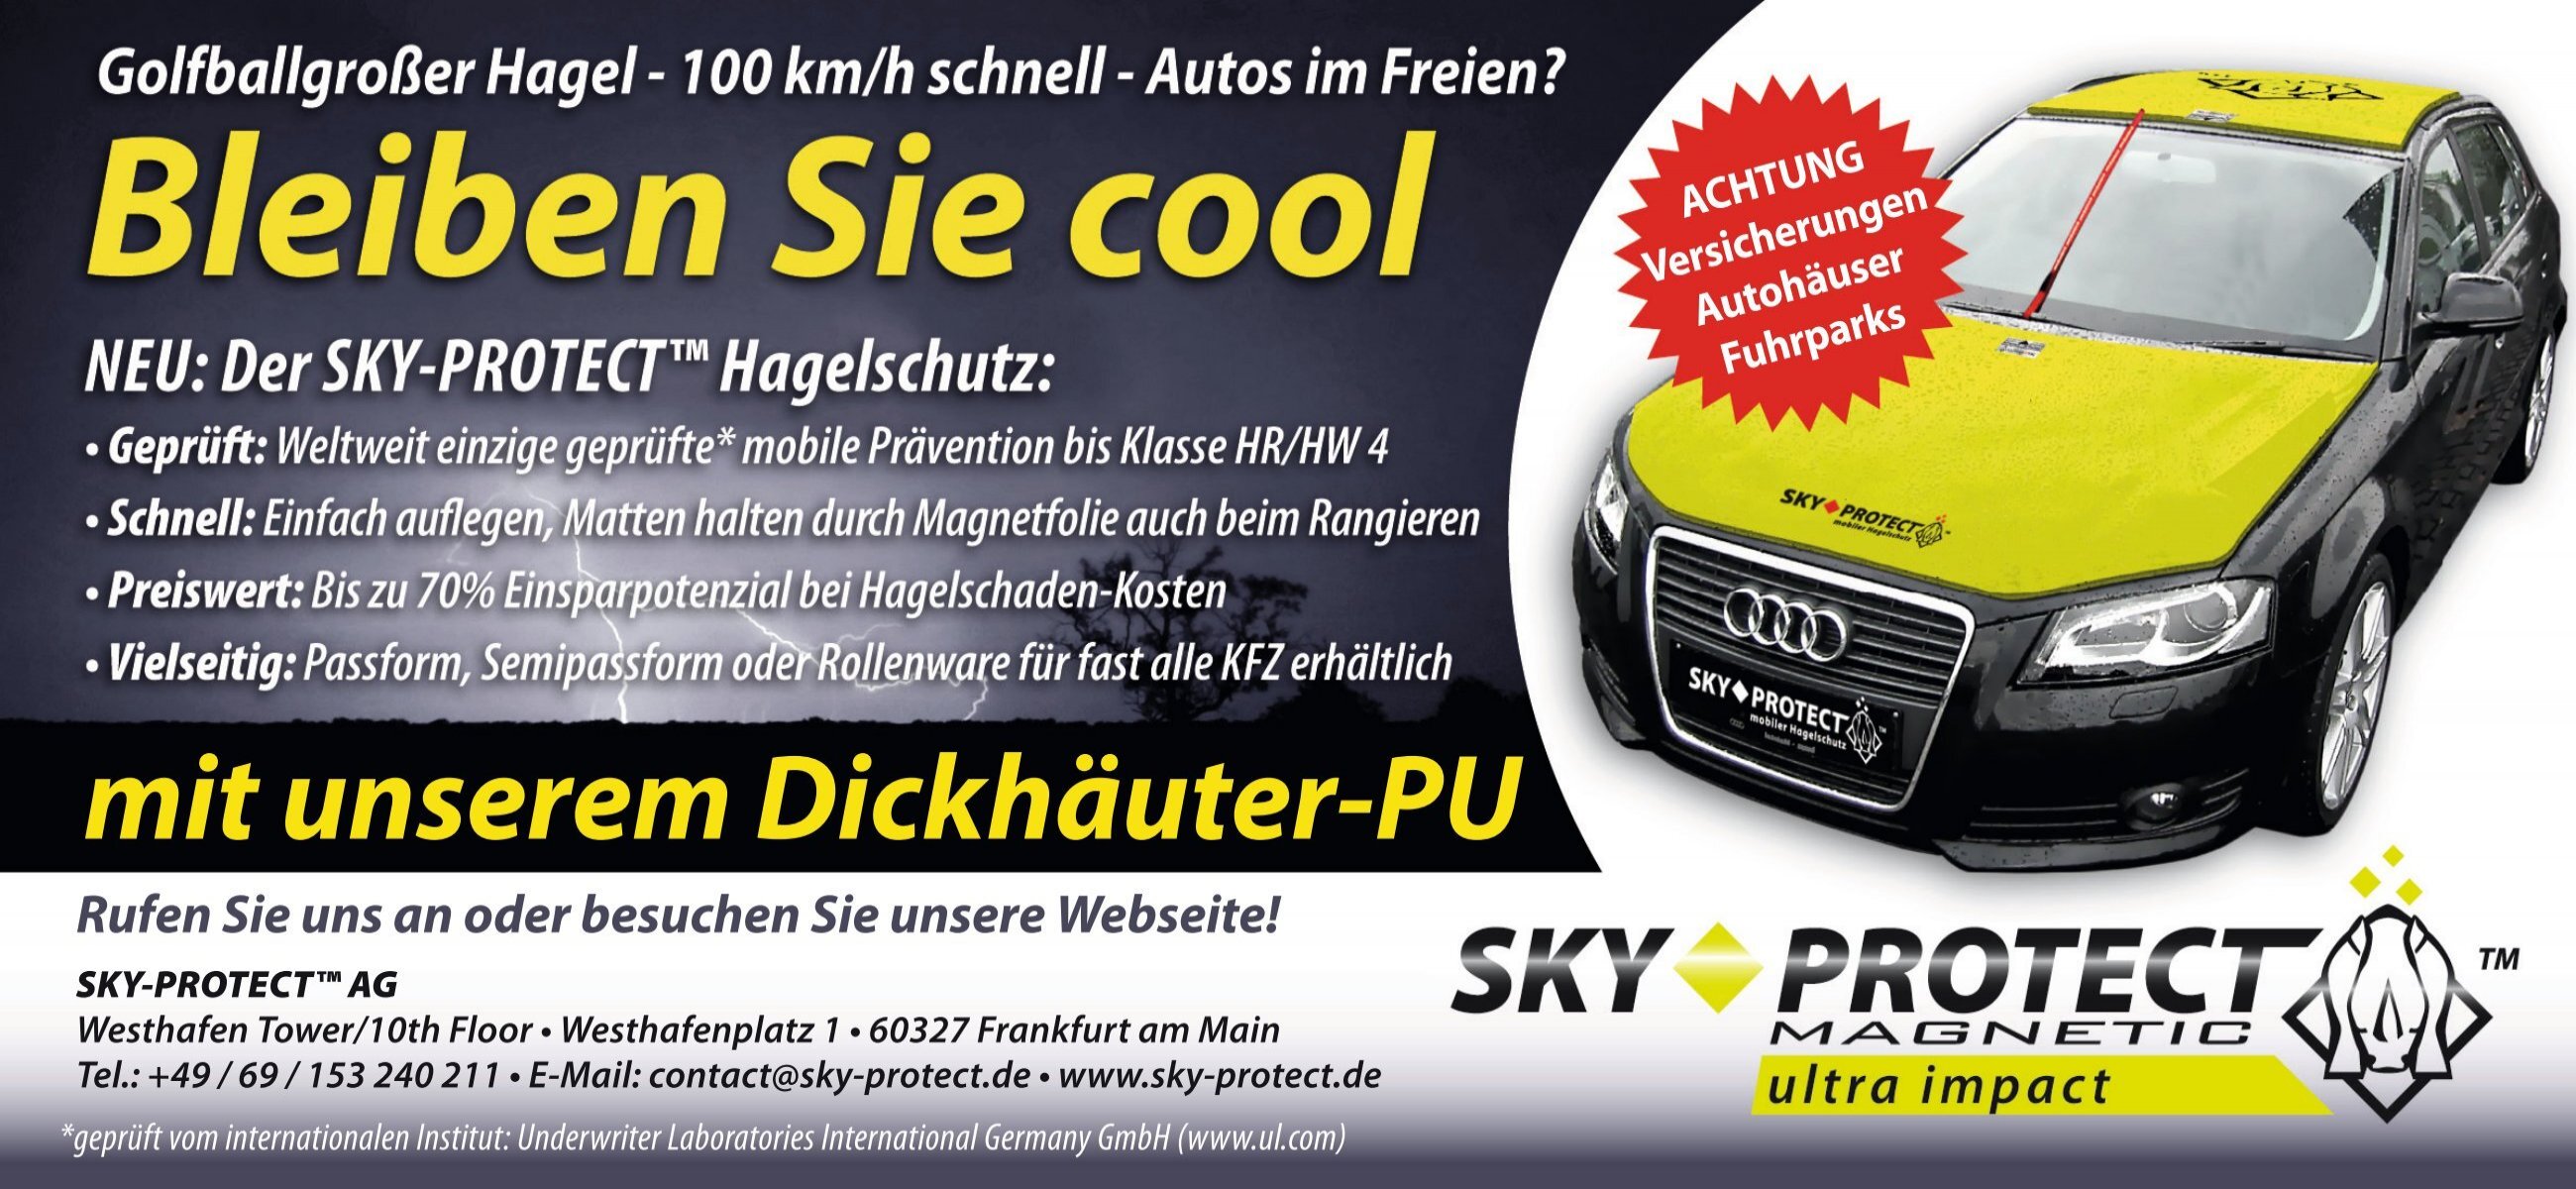 Sky-Protect ultra impact-weltbester Hagelschutz für PKW!